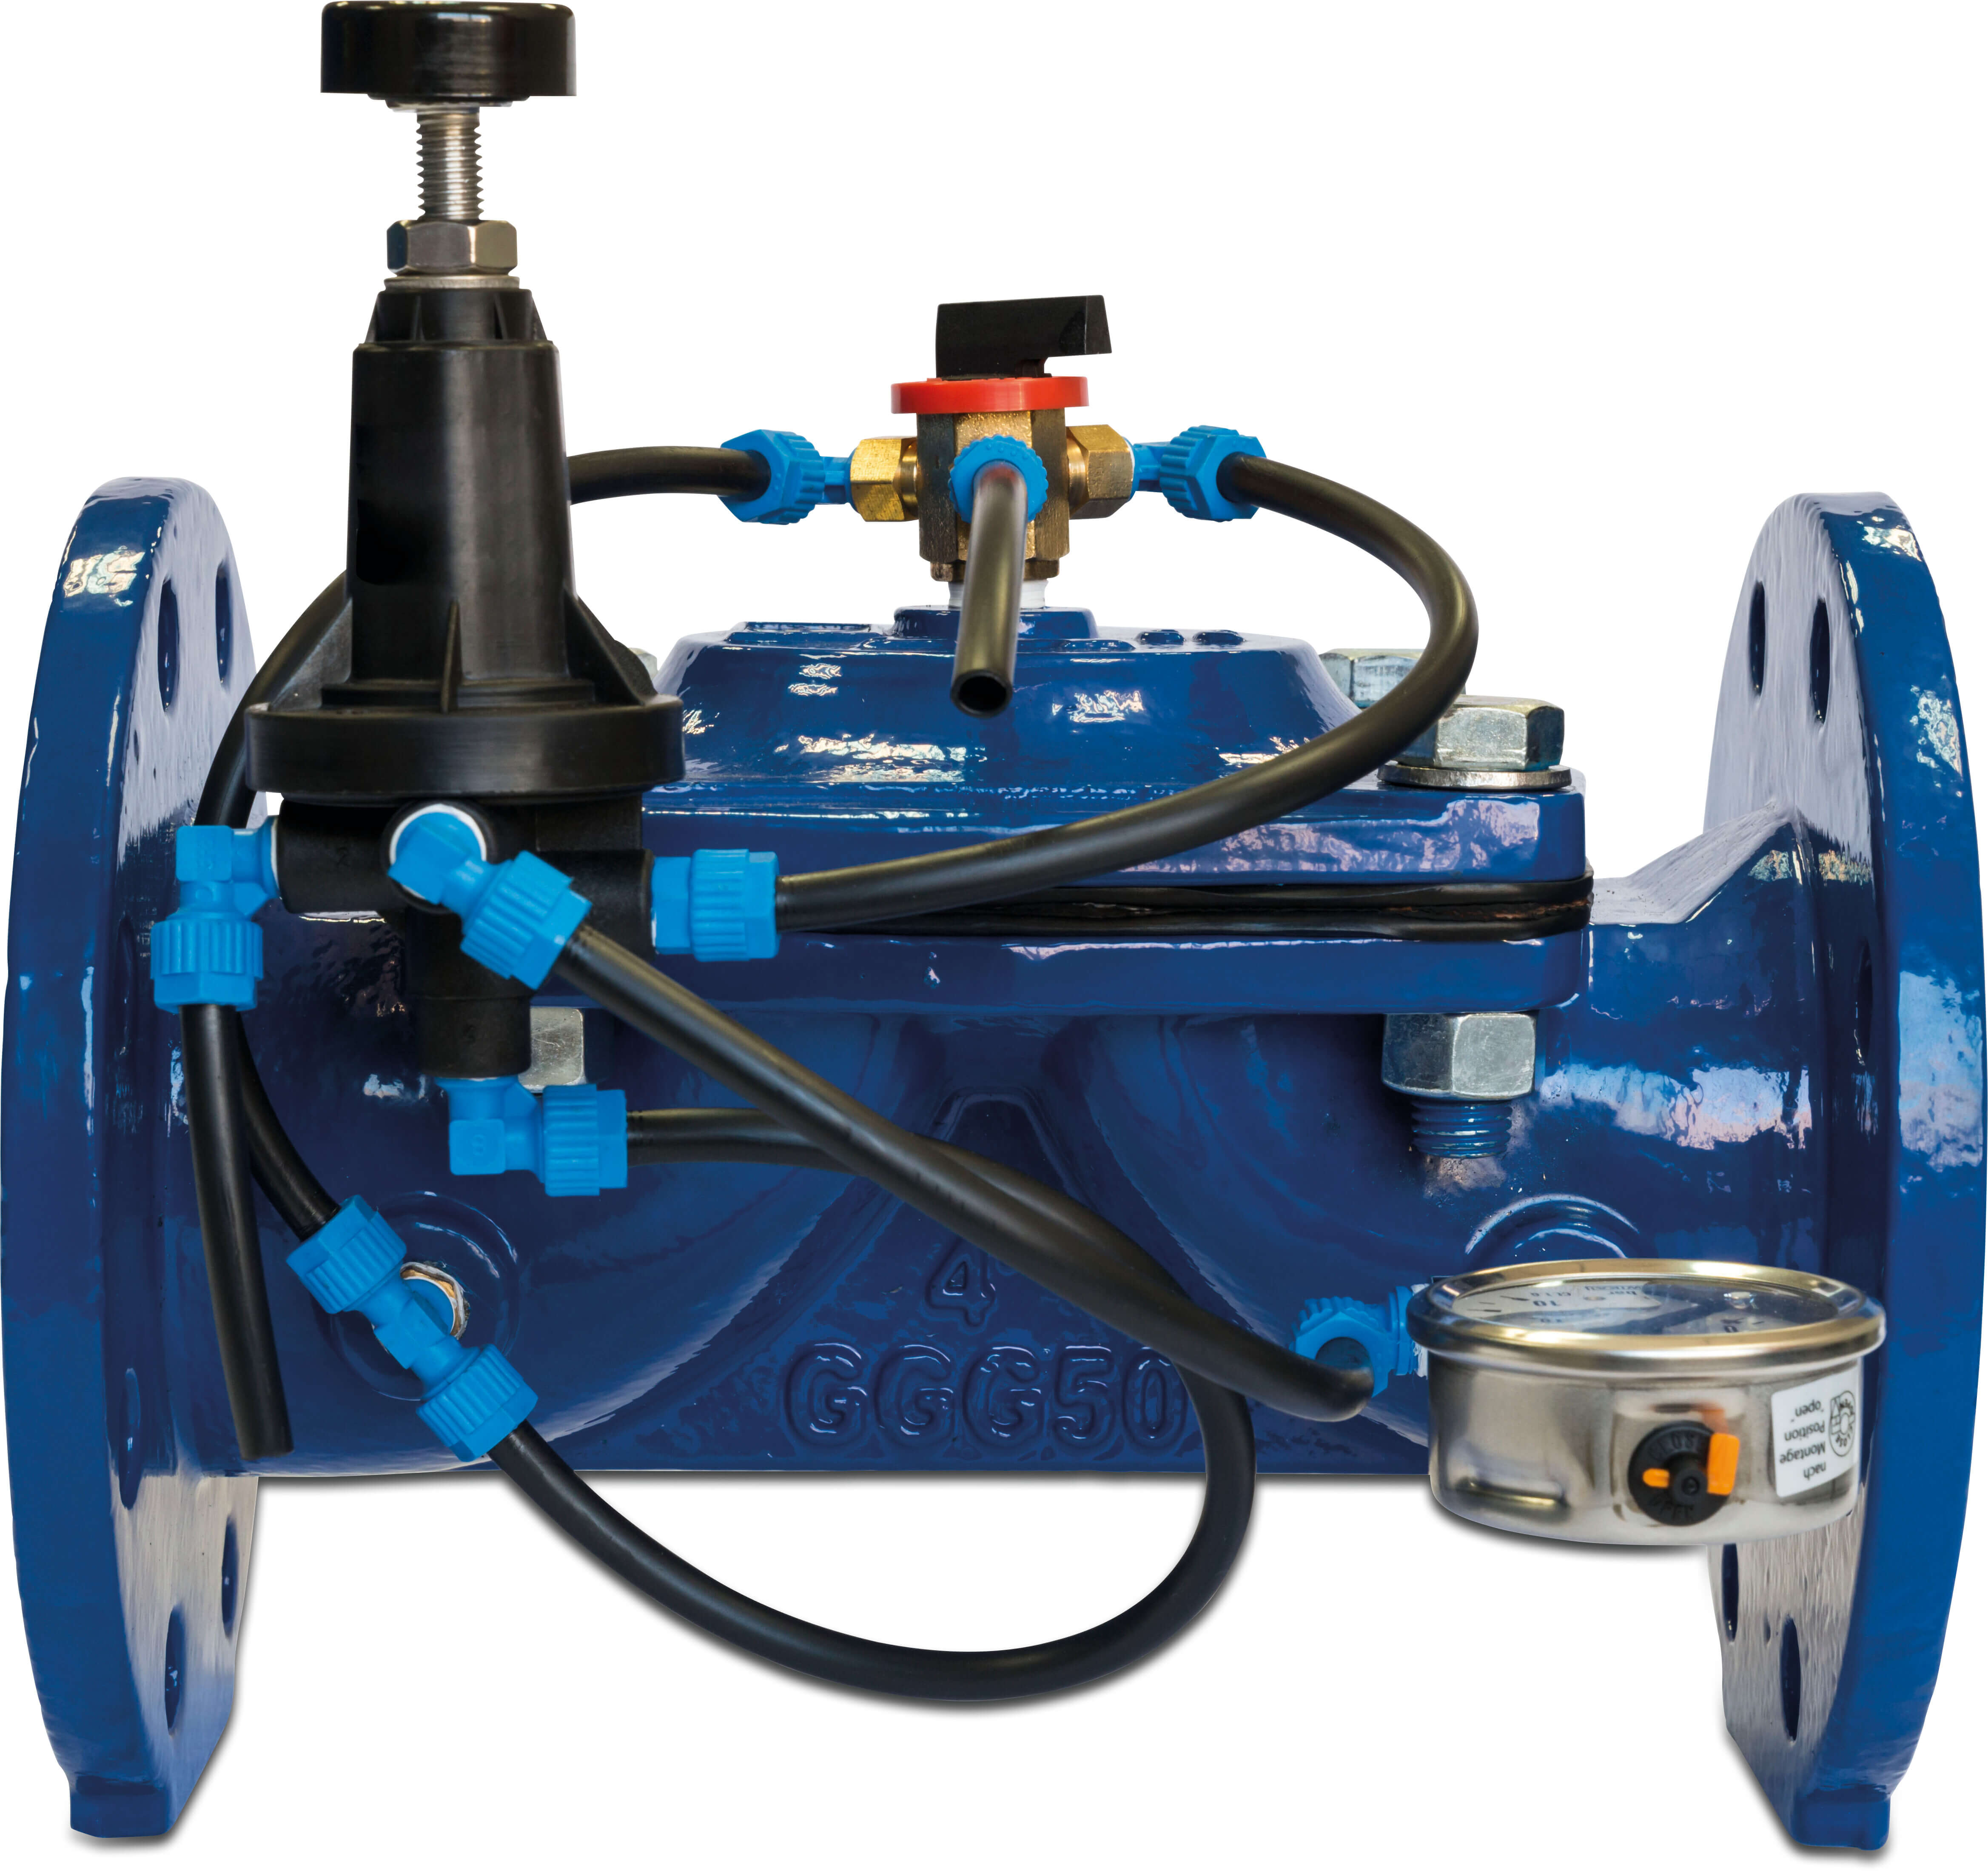 Azud Pressure reducing hydraulic valve cast iron GG 25 epoxy coating 2" female thread 16bar blue type FT-P.P